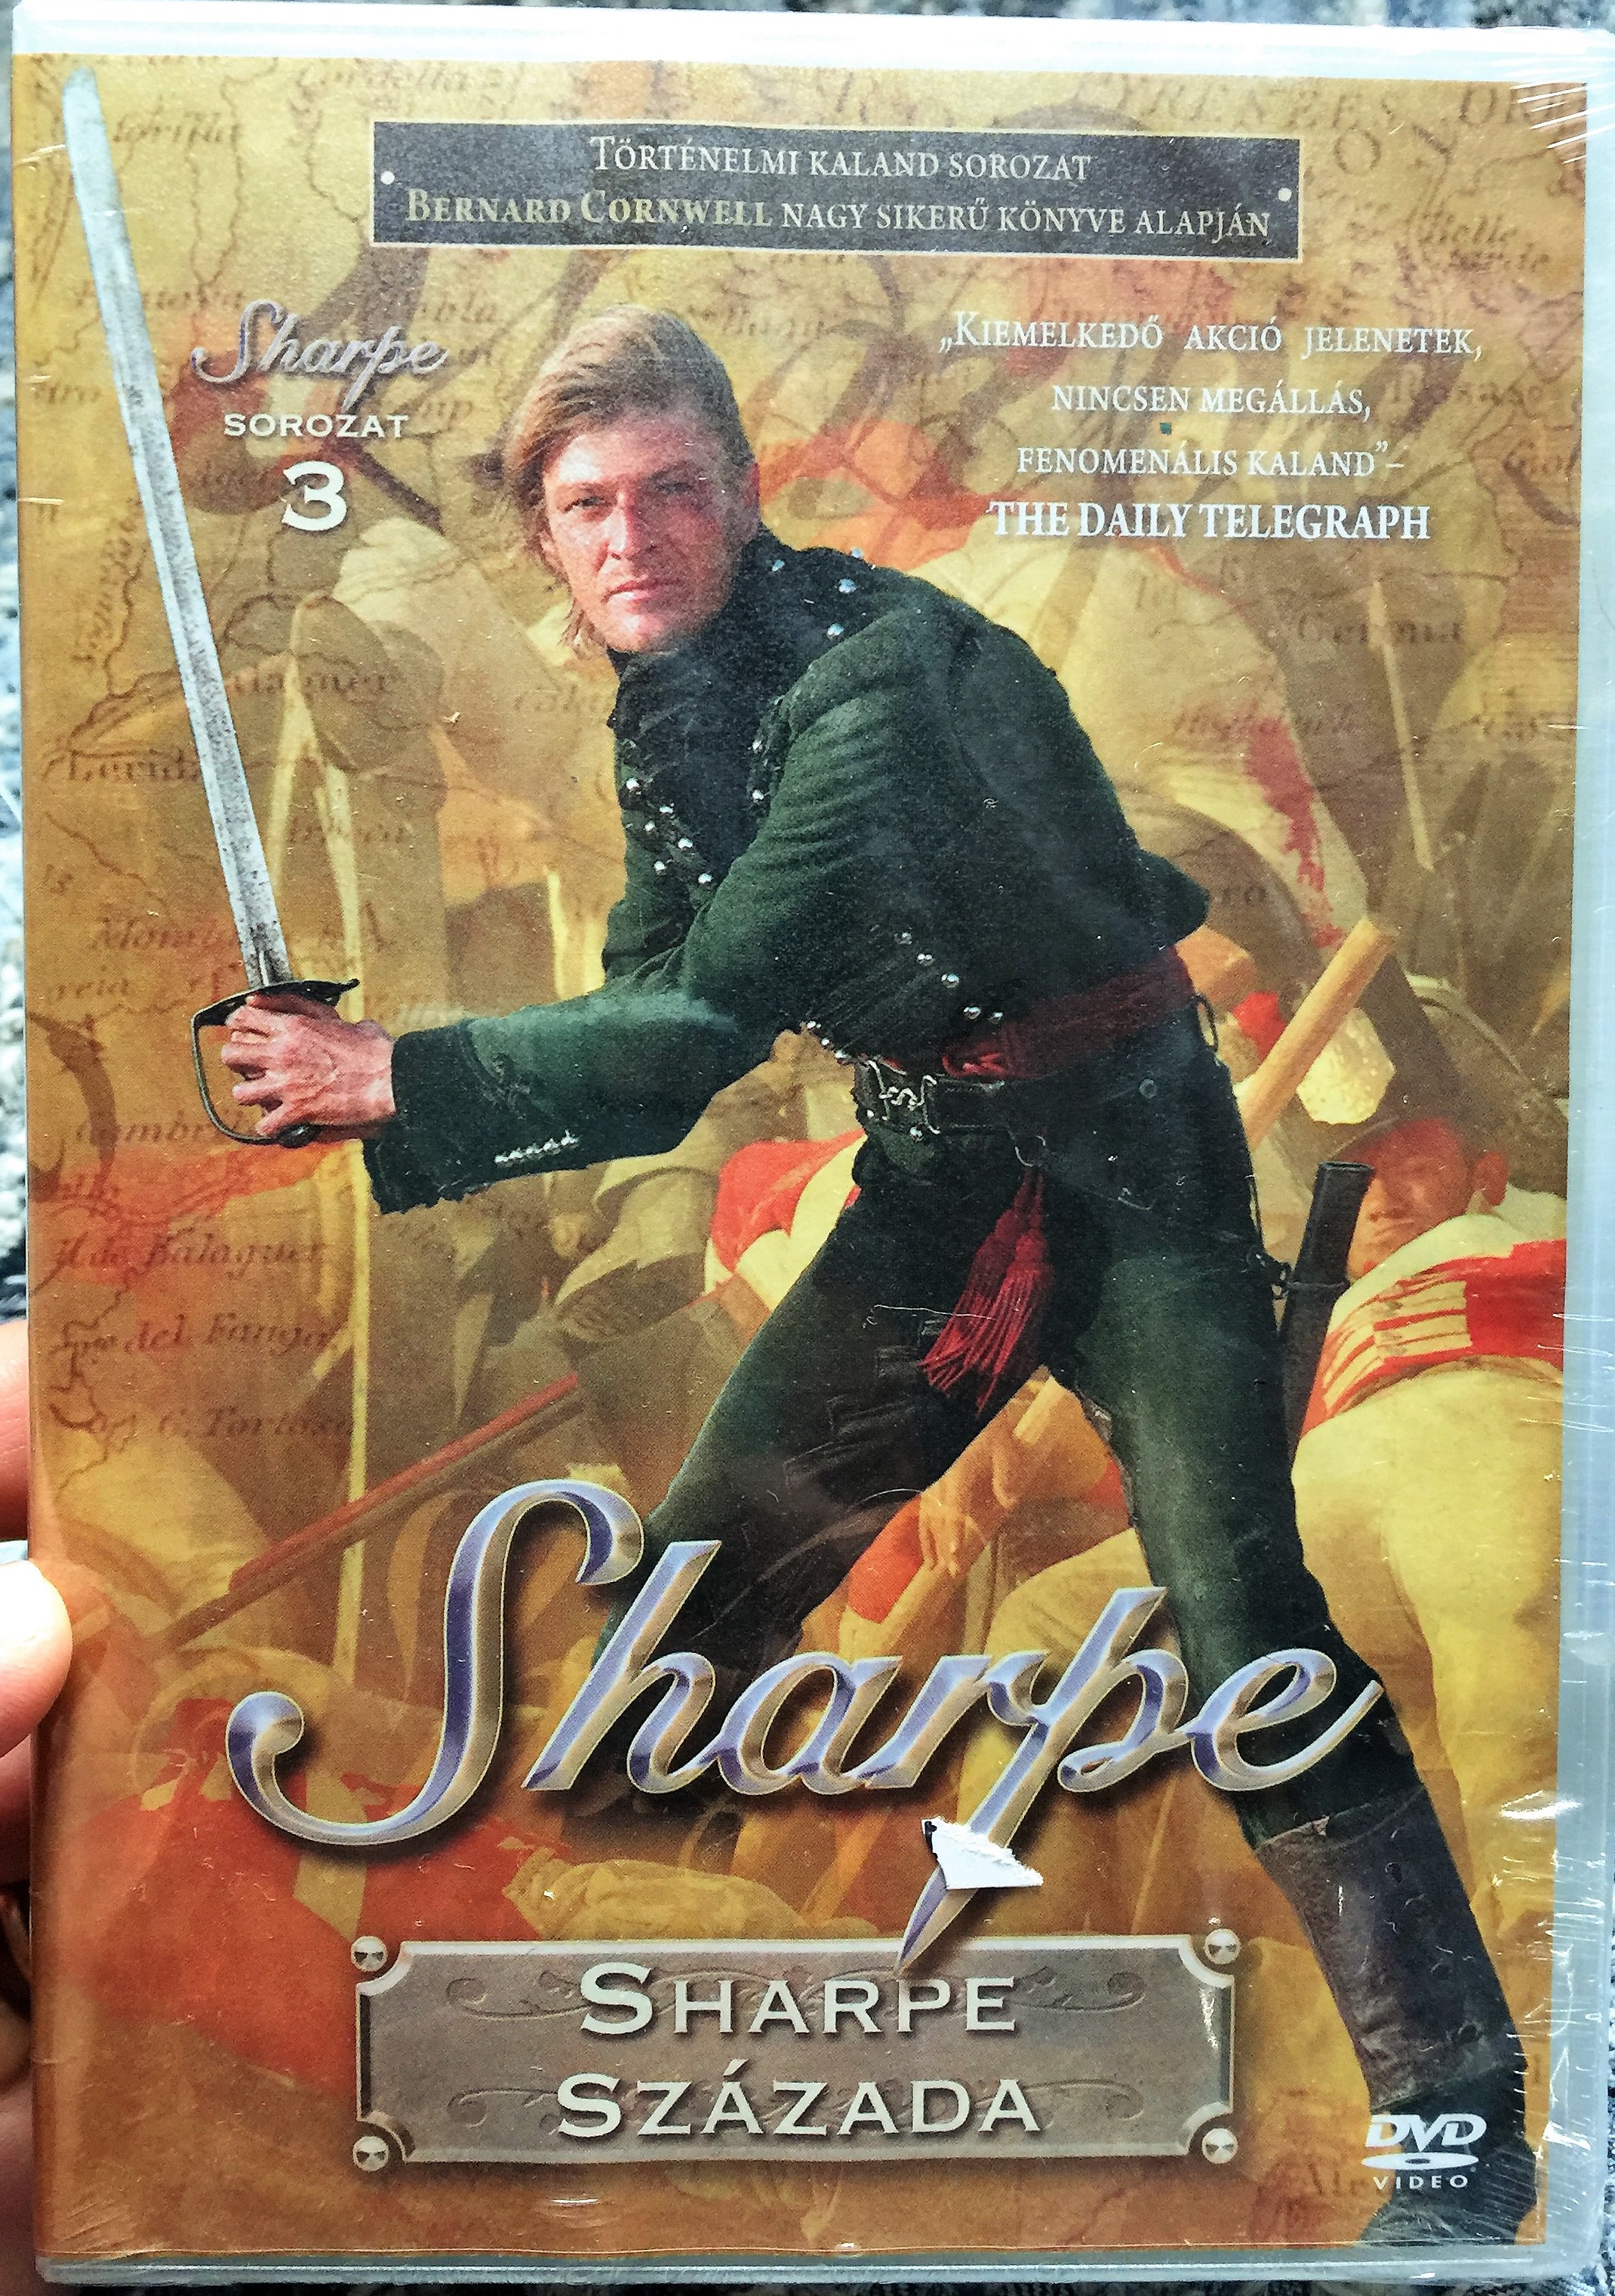 Sharpe Series 2. Sharpe's Company DVD 1993 Sharpe Sorozat 1